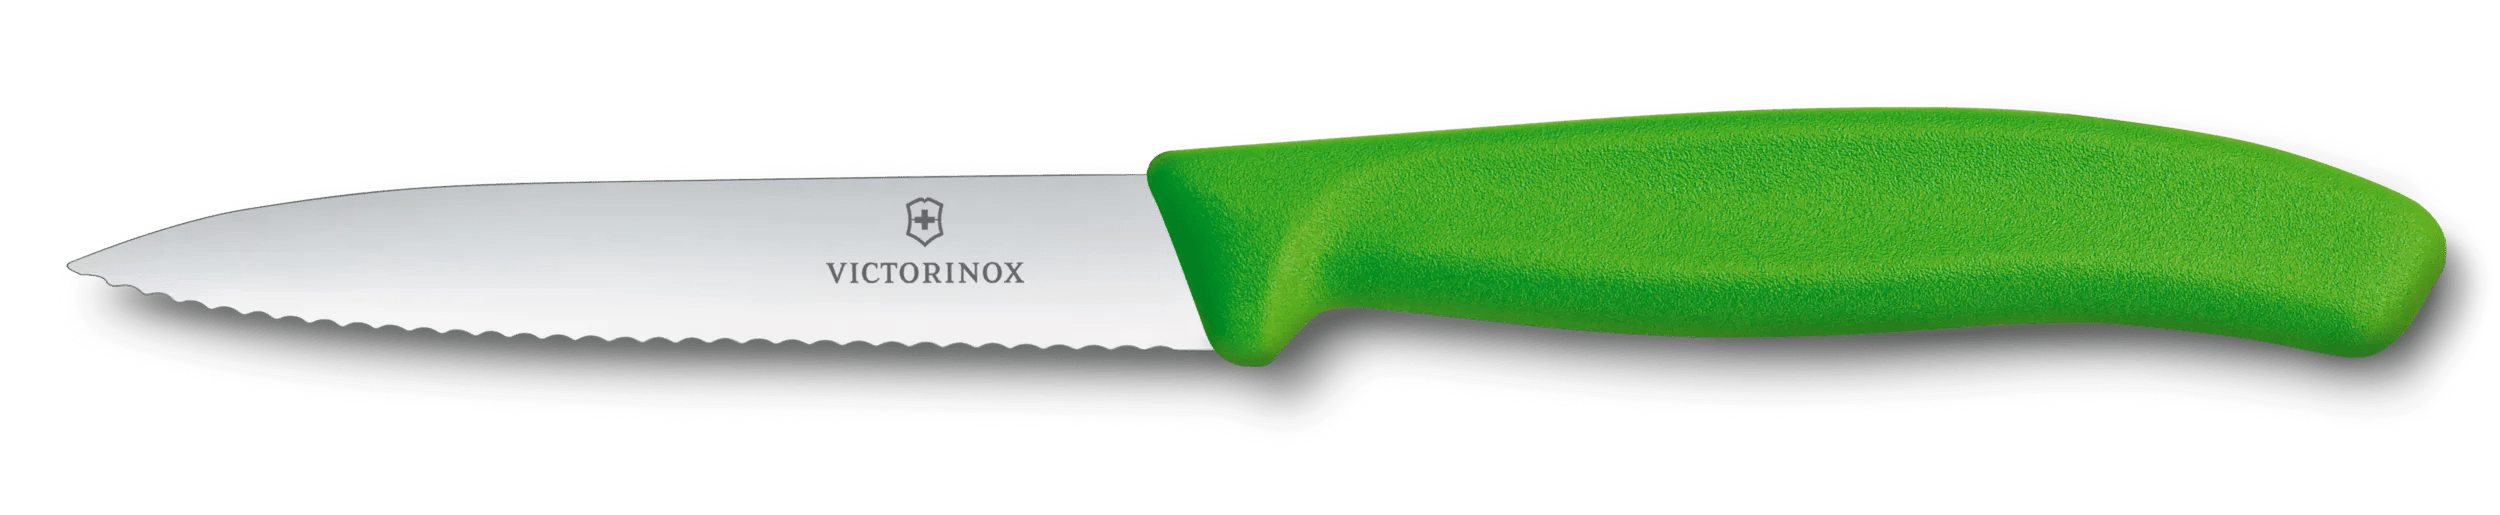 Victorinox スイスクラシック パーリングナイフ グリーン - 6.7736.L4